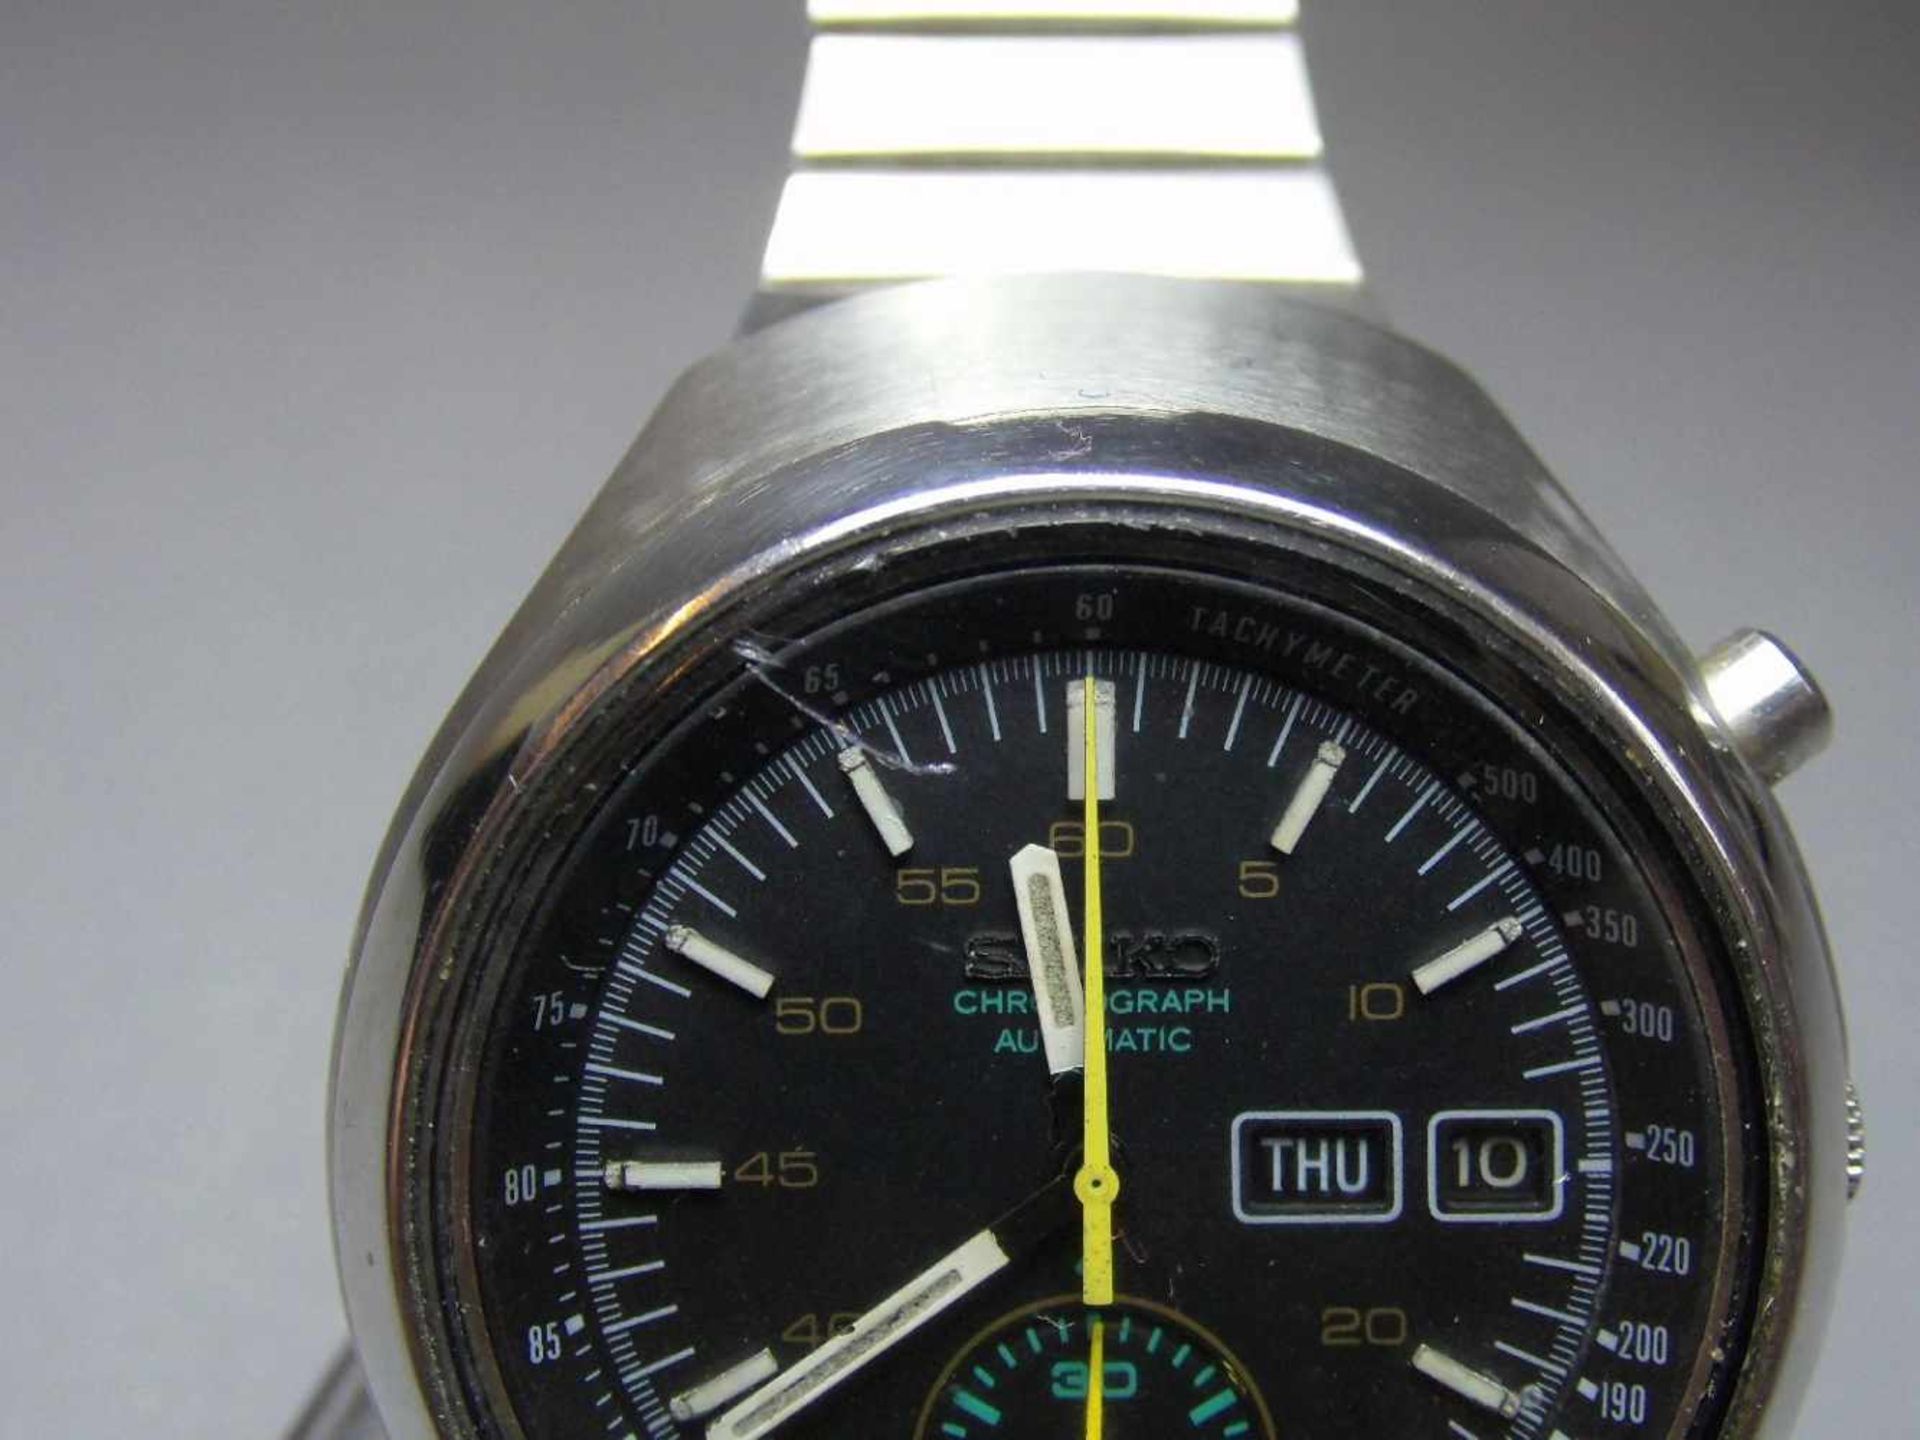 VINTAGE CHRONOGRAPH / ARMBANDUHR : SEIKO - 6139 - 7160 T / wristwatch, Japan, 1970er Jahre, - Image 2 of 8